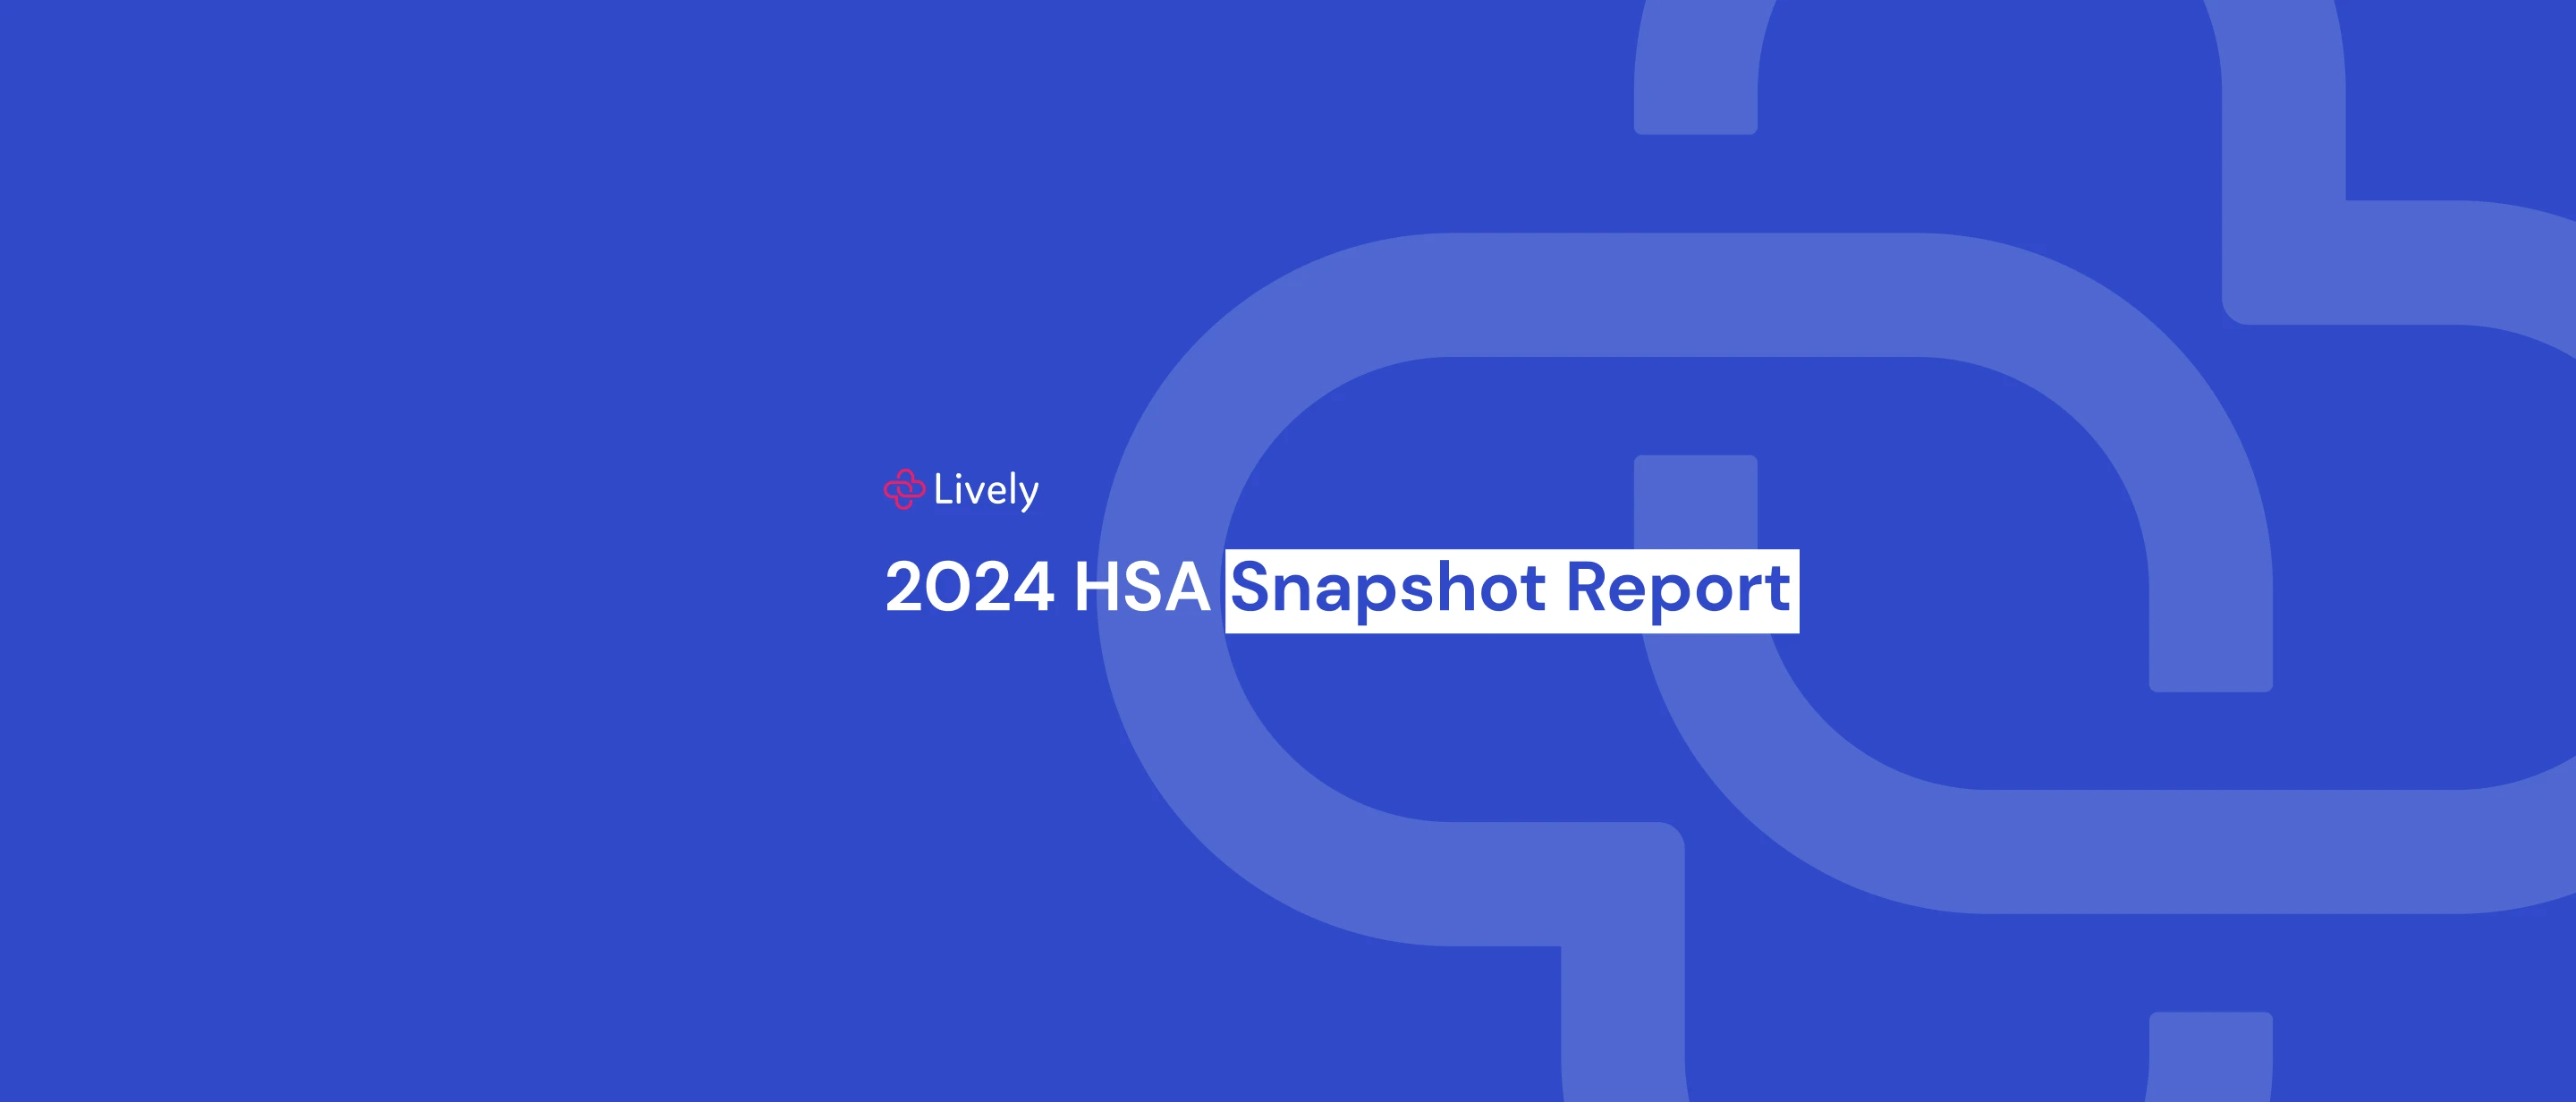 Blog HSA Snapsnot Report Images - Header Centered - Promo Image